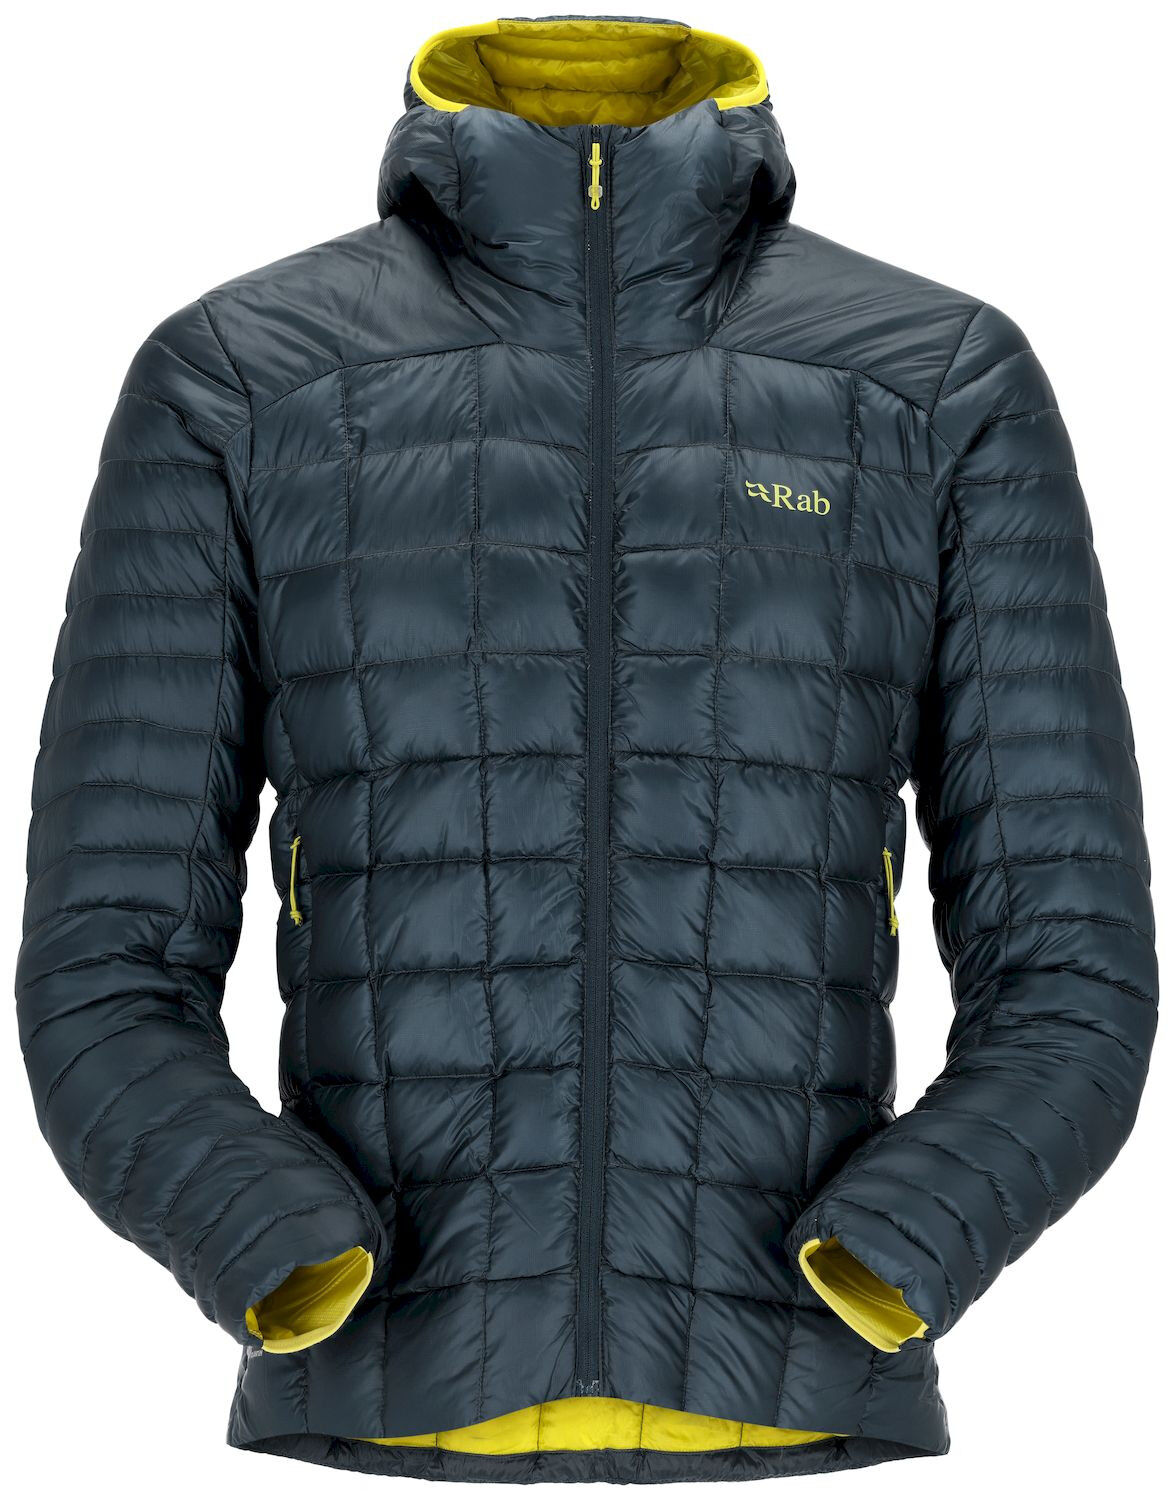 Rab Mythic Alpine Light Jacket - Down jacket - Men's